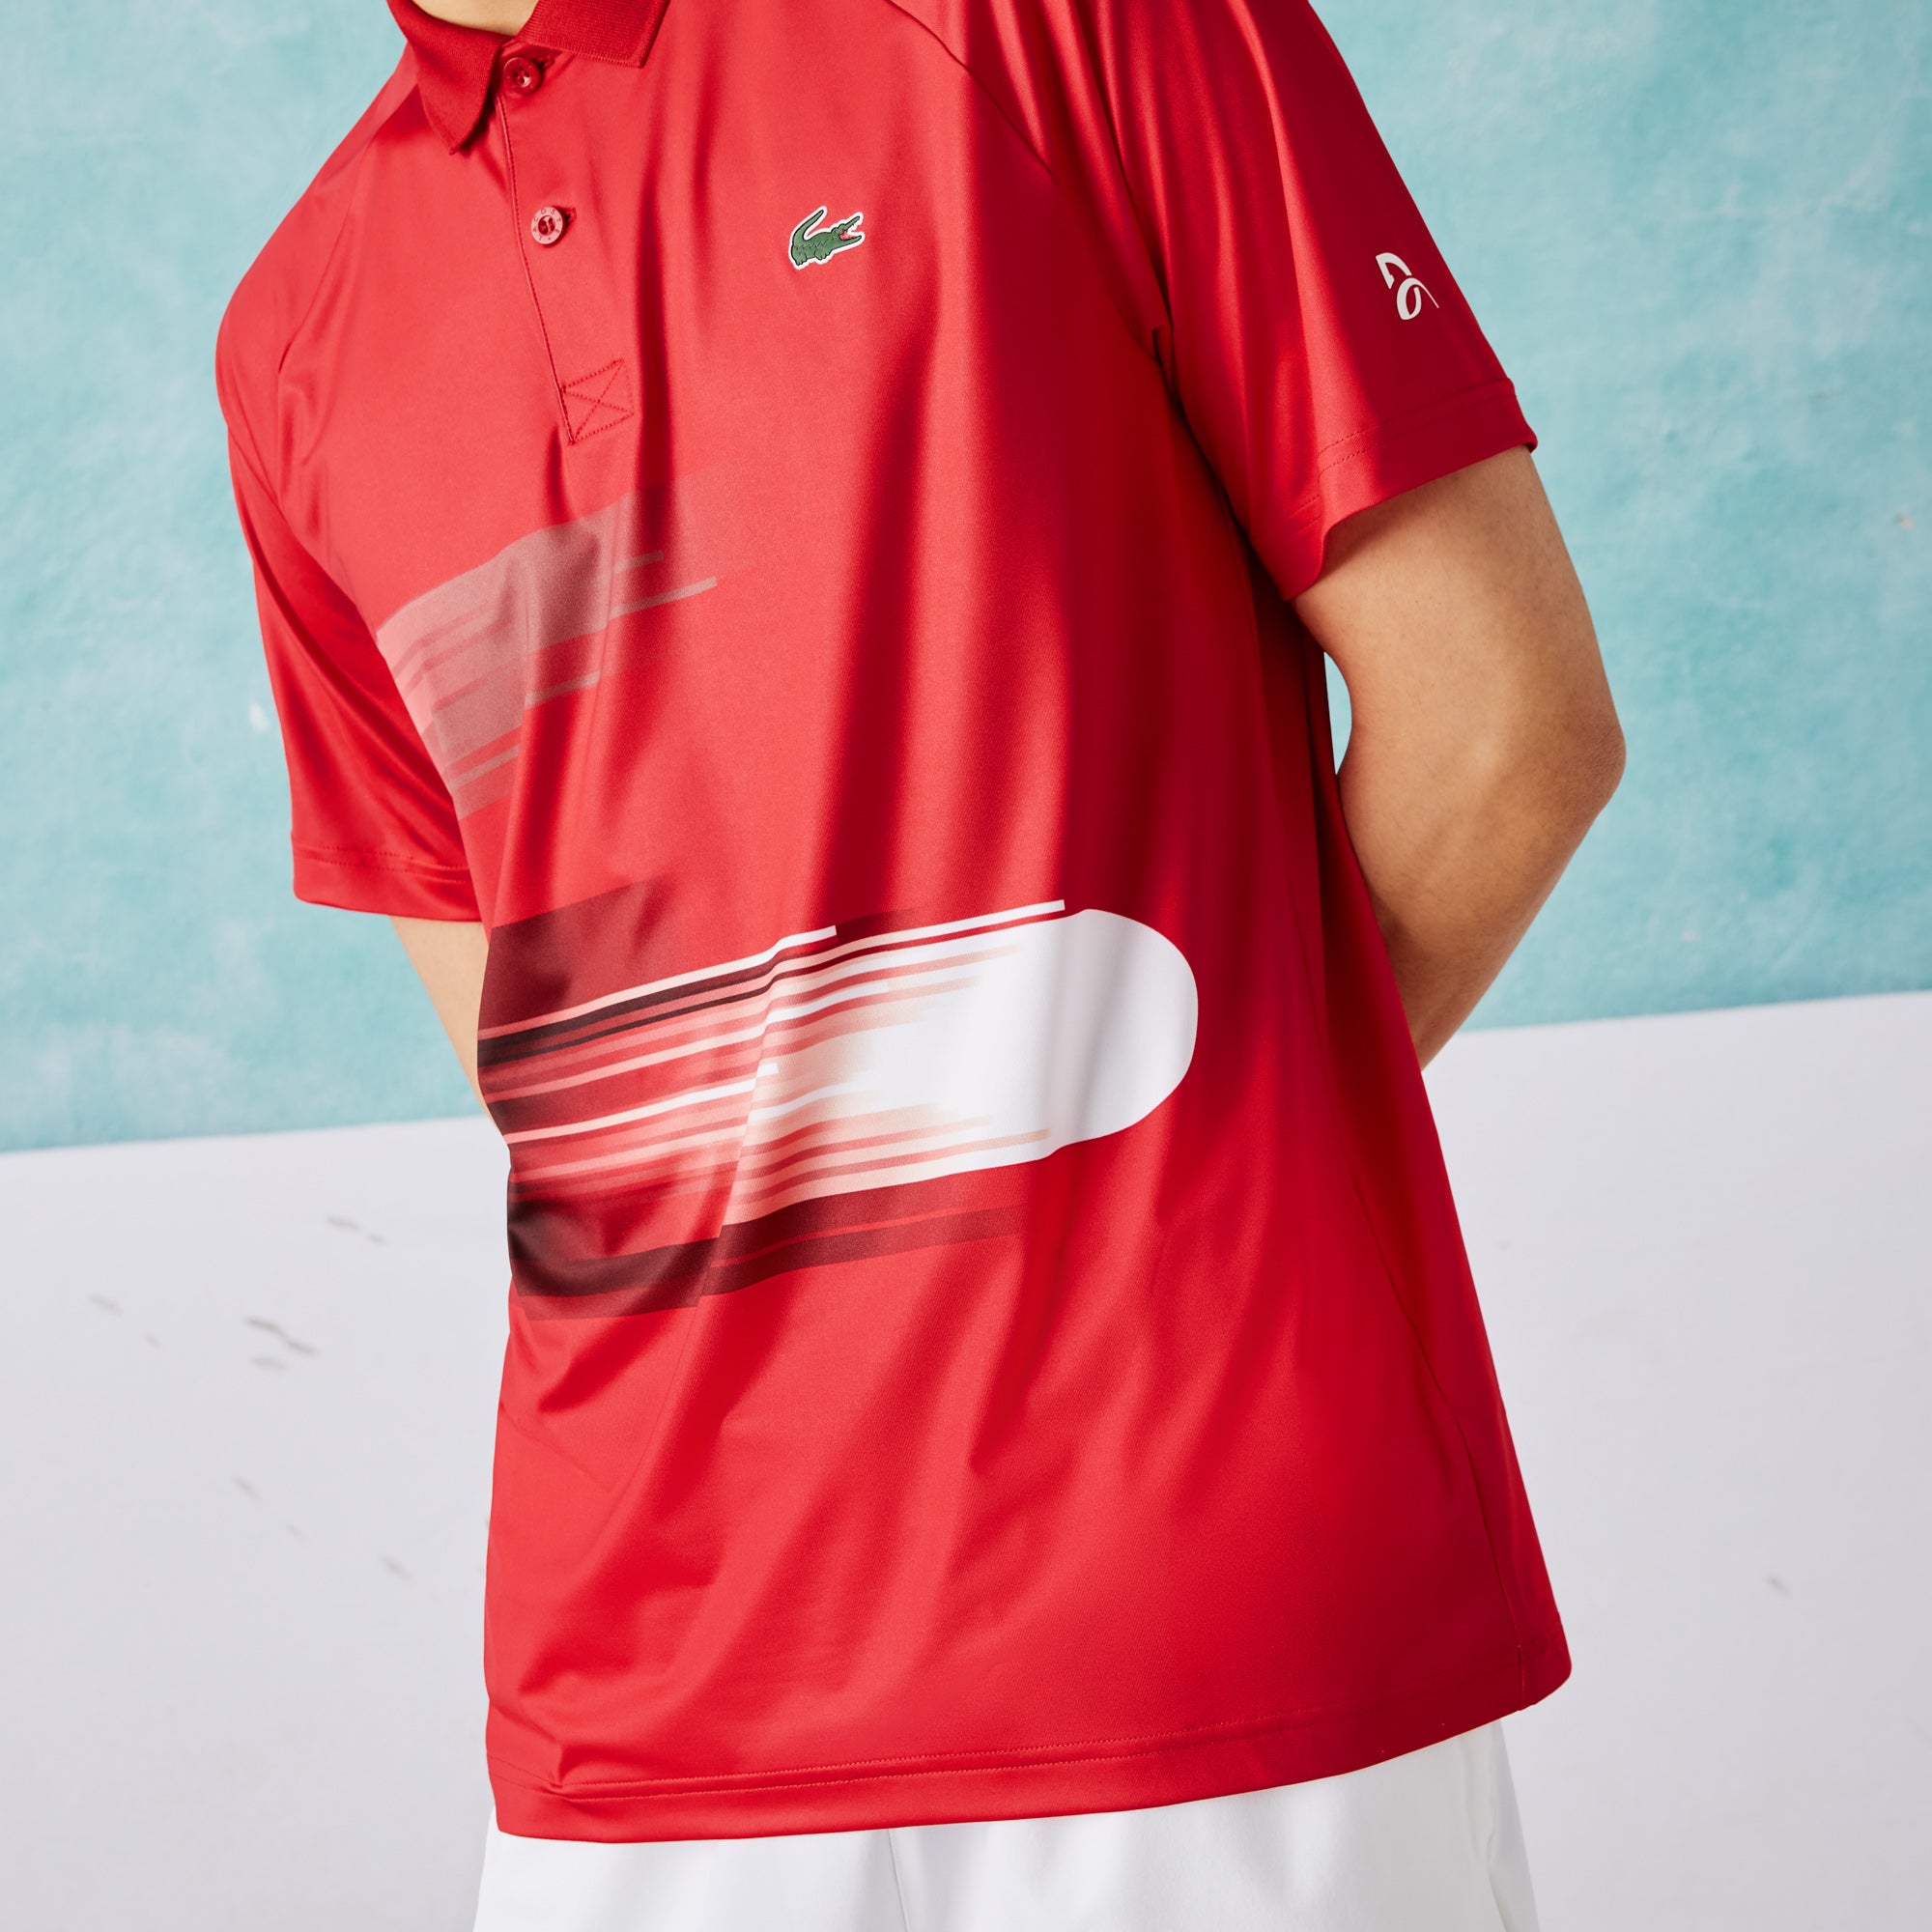 Lacoste Novak Djokovic Men's Tennis Polo Red (7)